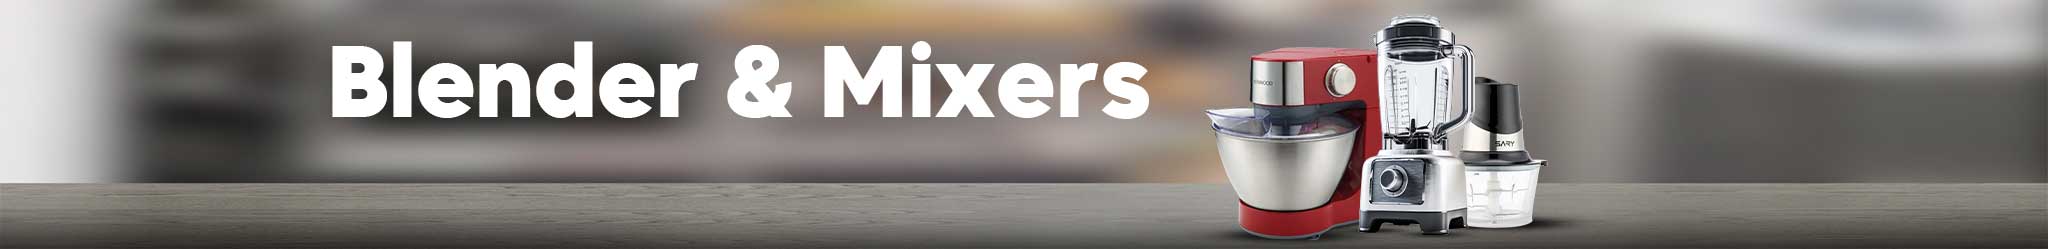 Blender & Mixers